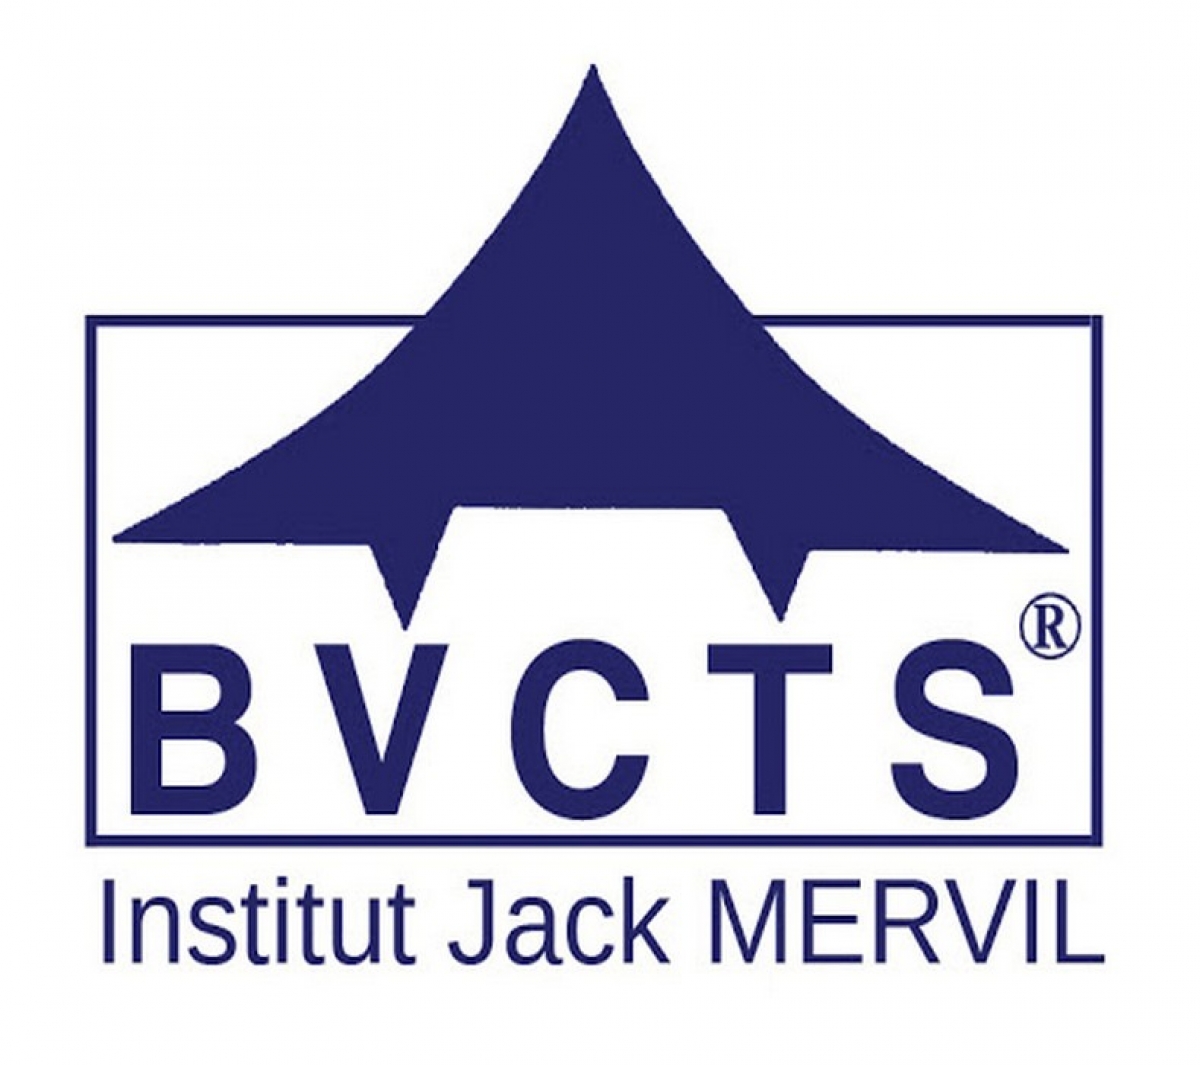 BVCTS INSTITUT JACK MERVIL